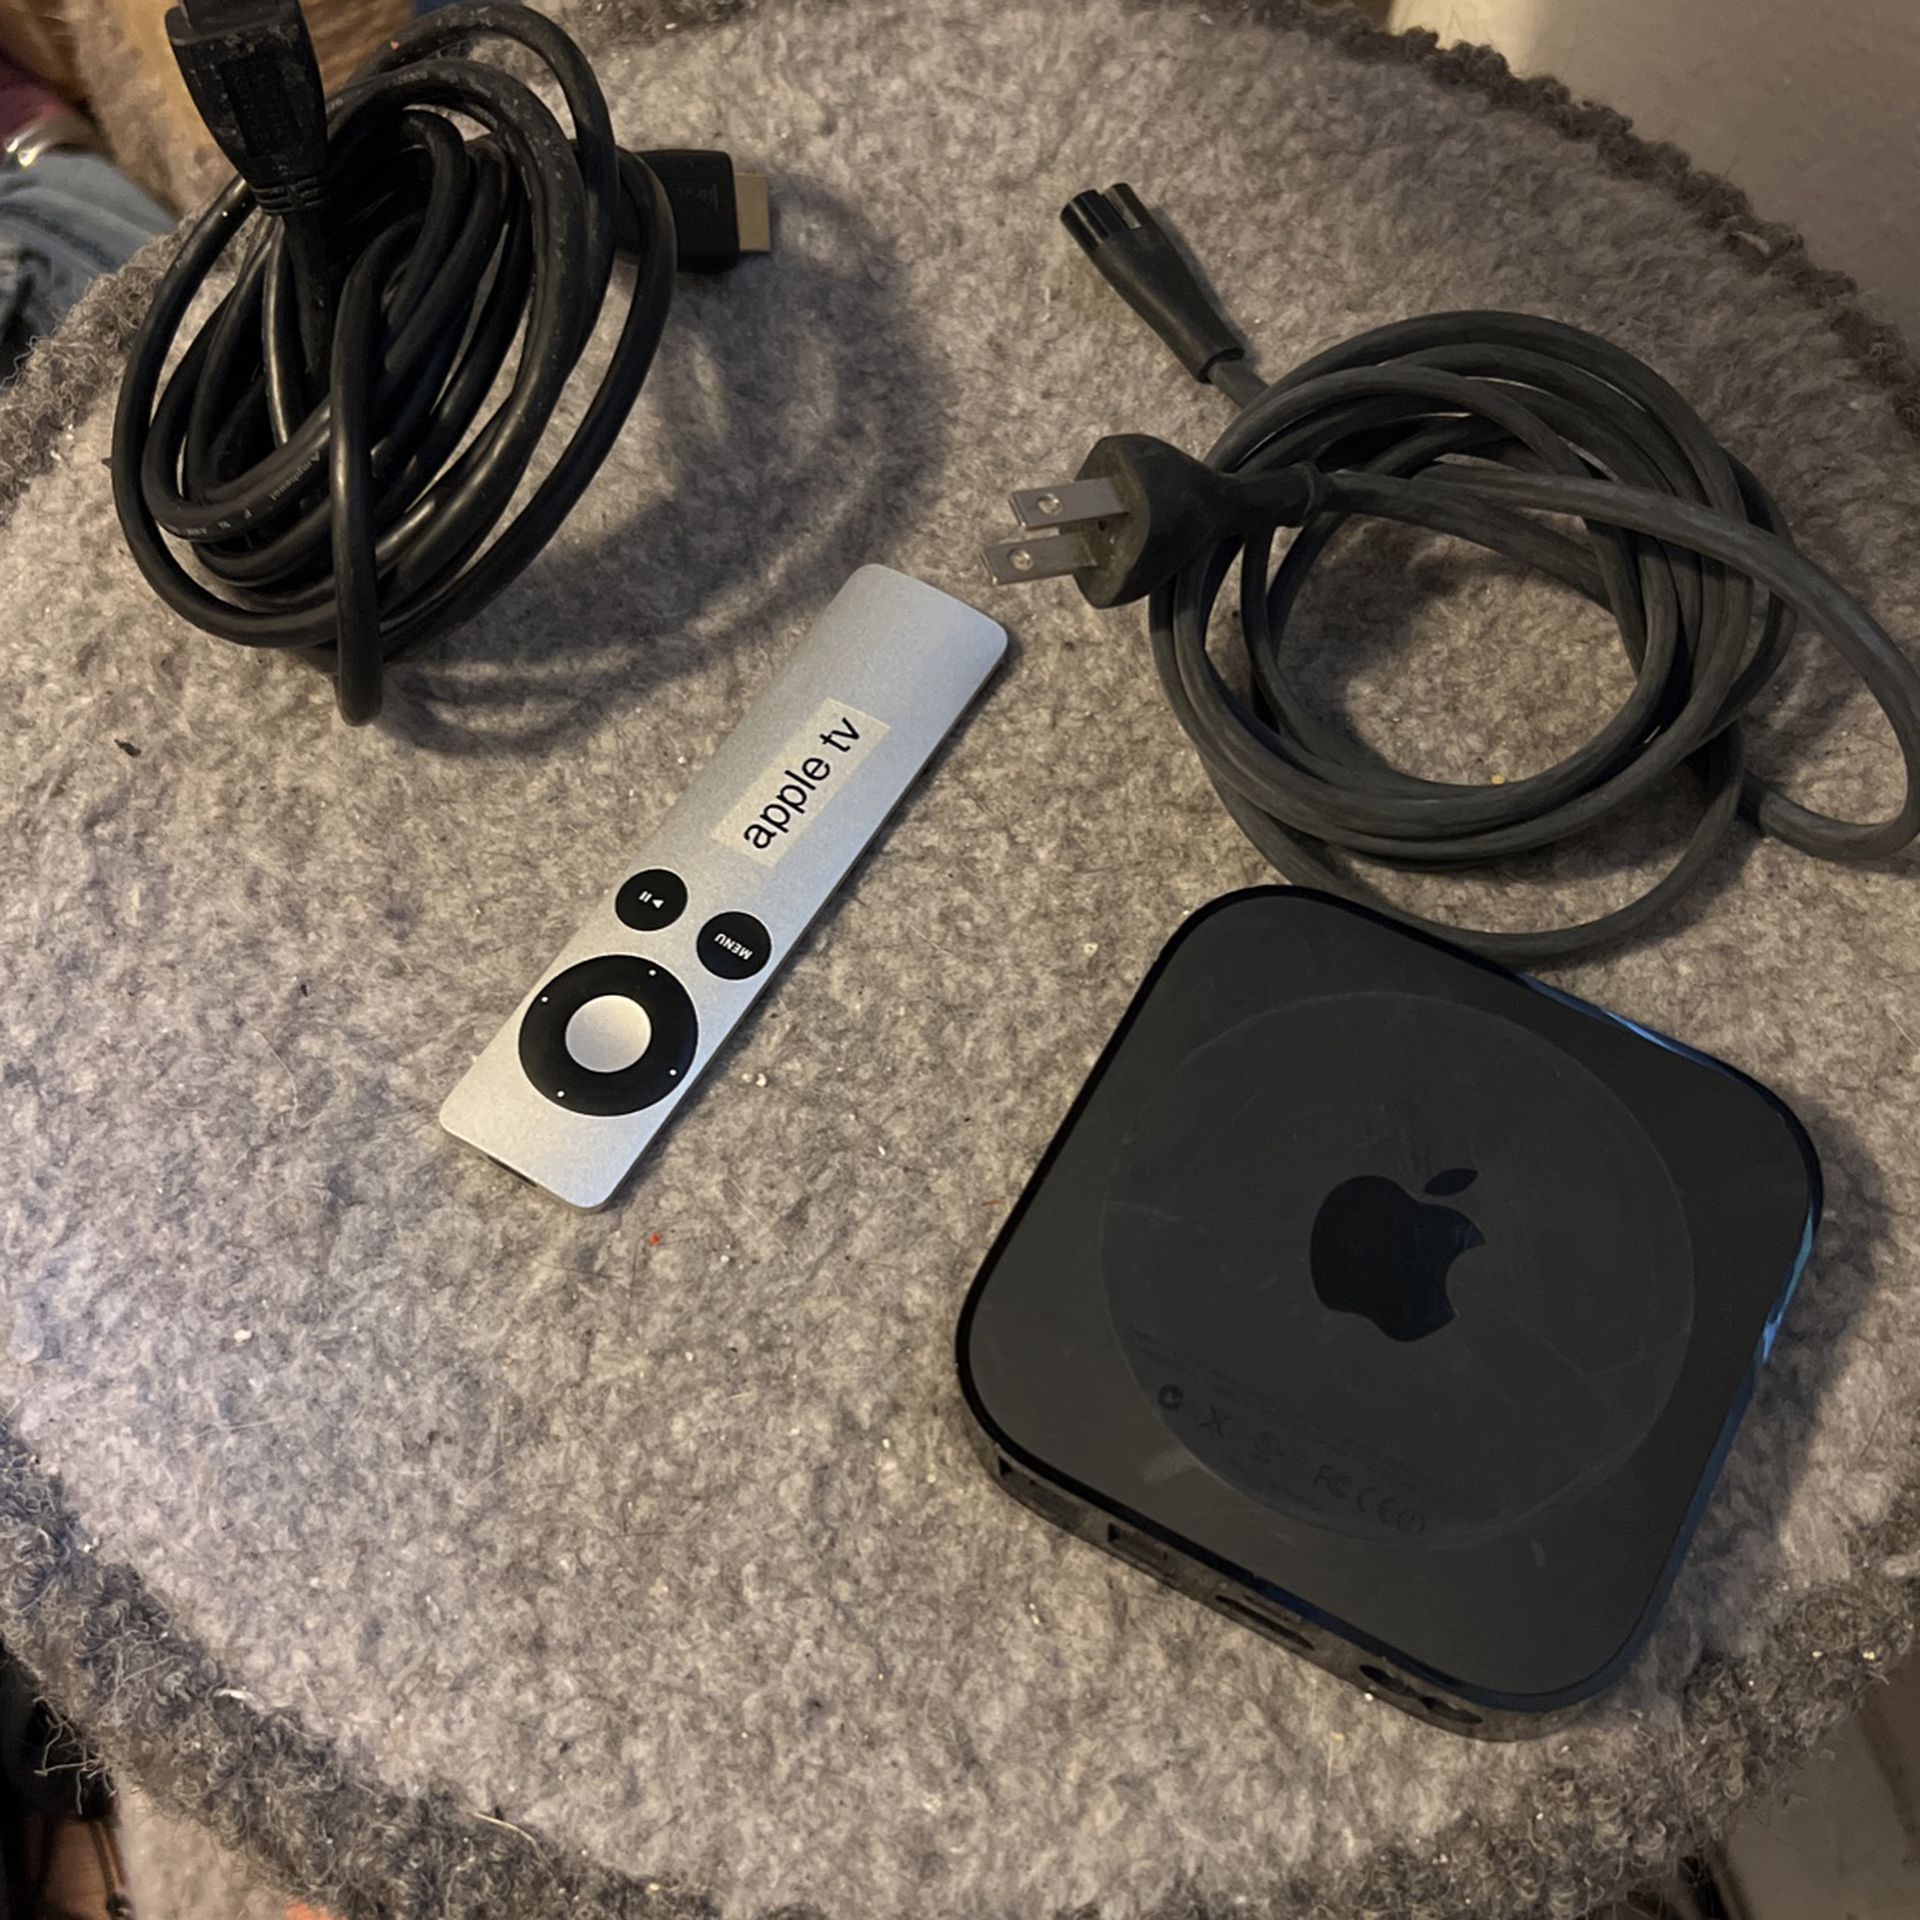 Apple Tv 32gb W/hdmi, Remote, And Power Cord